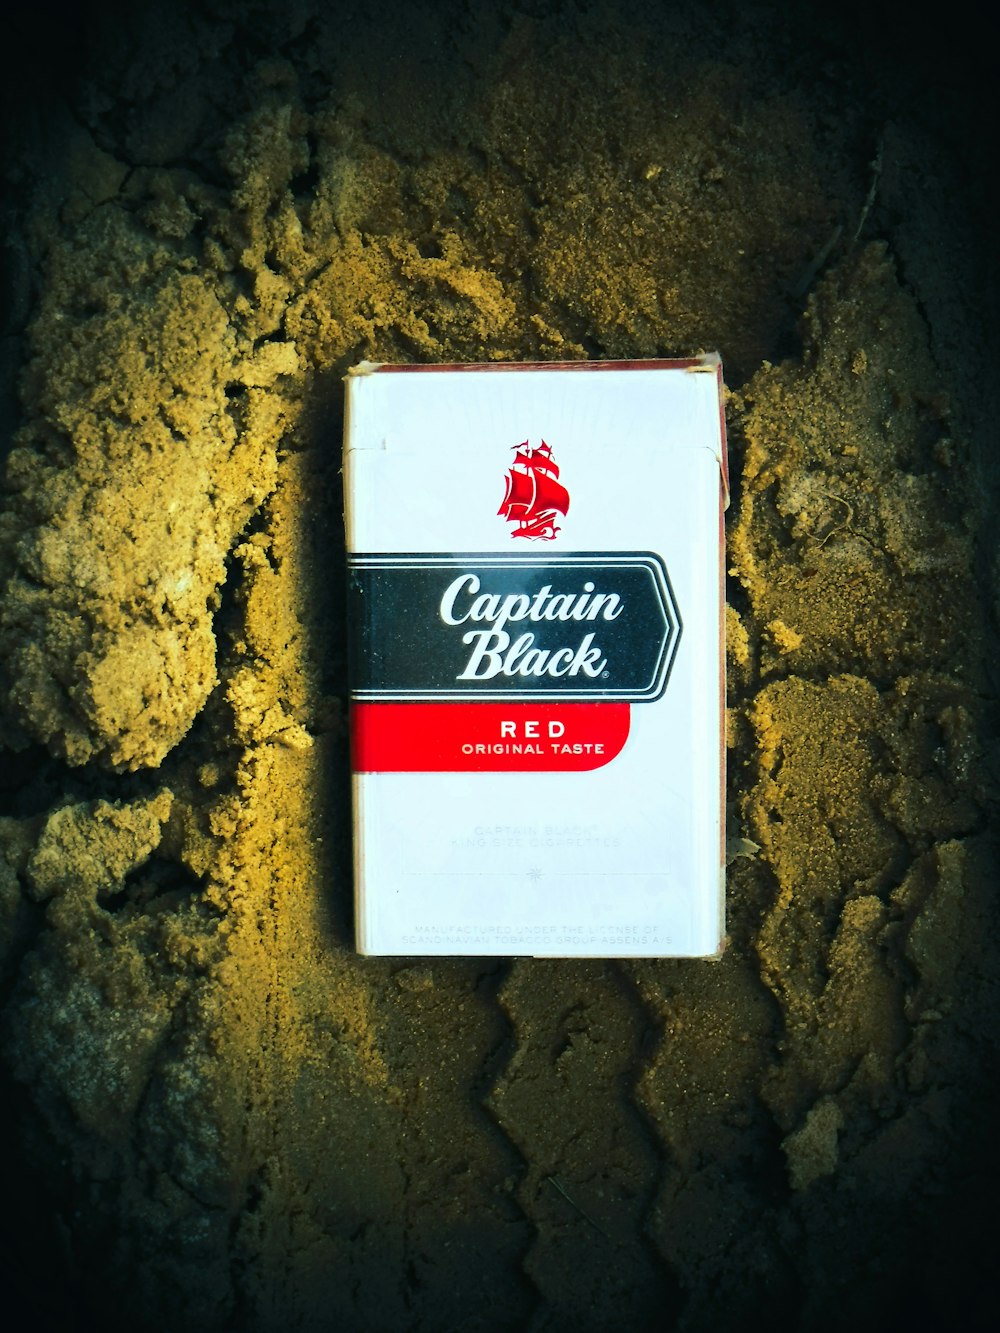 a close up of a box of cigarettes